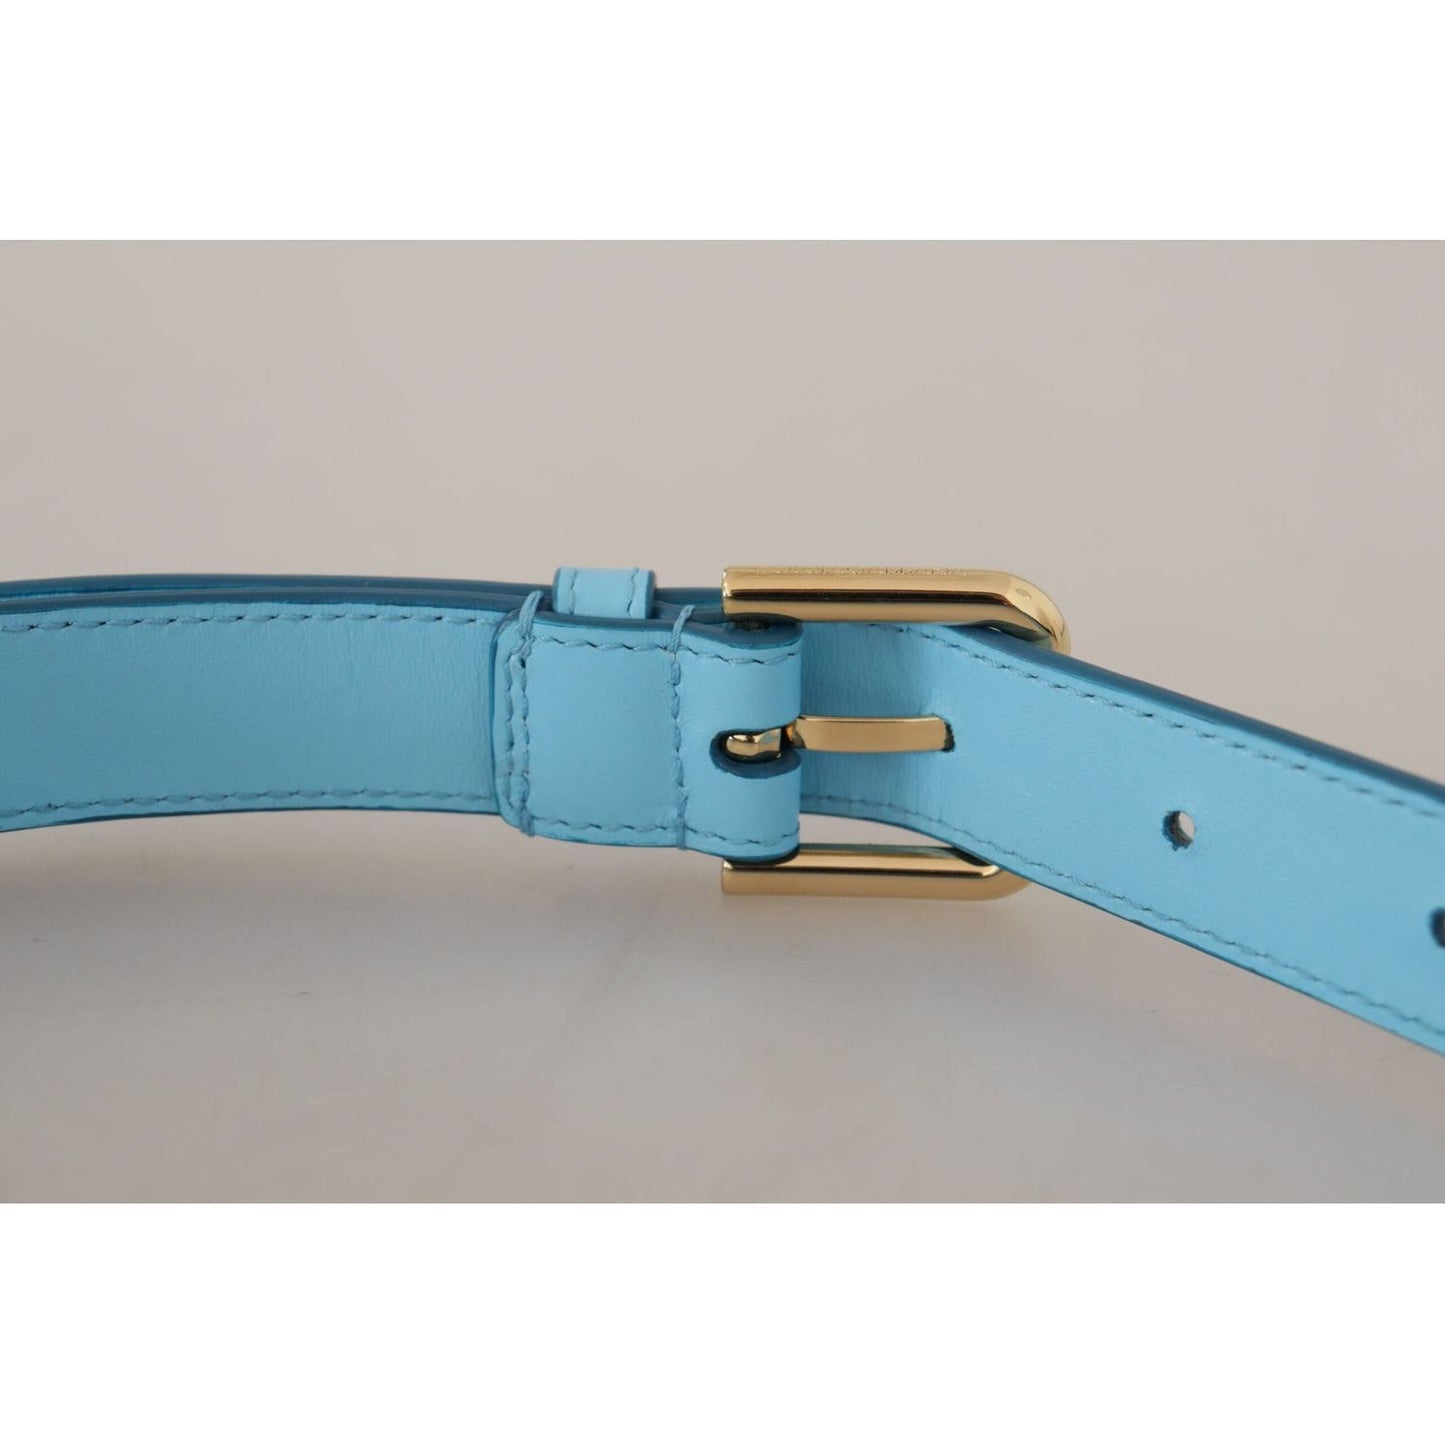 Dolce & GabbanaElegant Sky Blue Leather Belt with Logo BuckleMcRichard Designer Brands£239.00